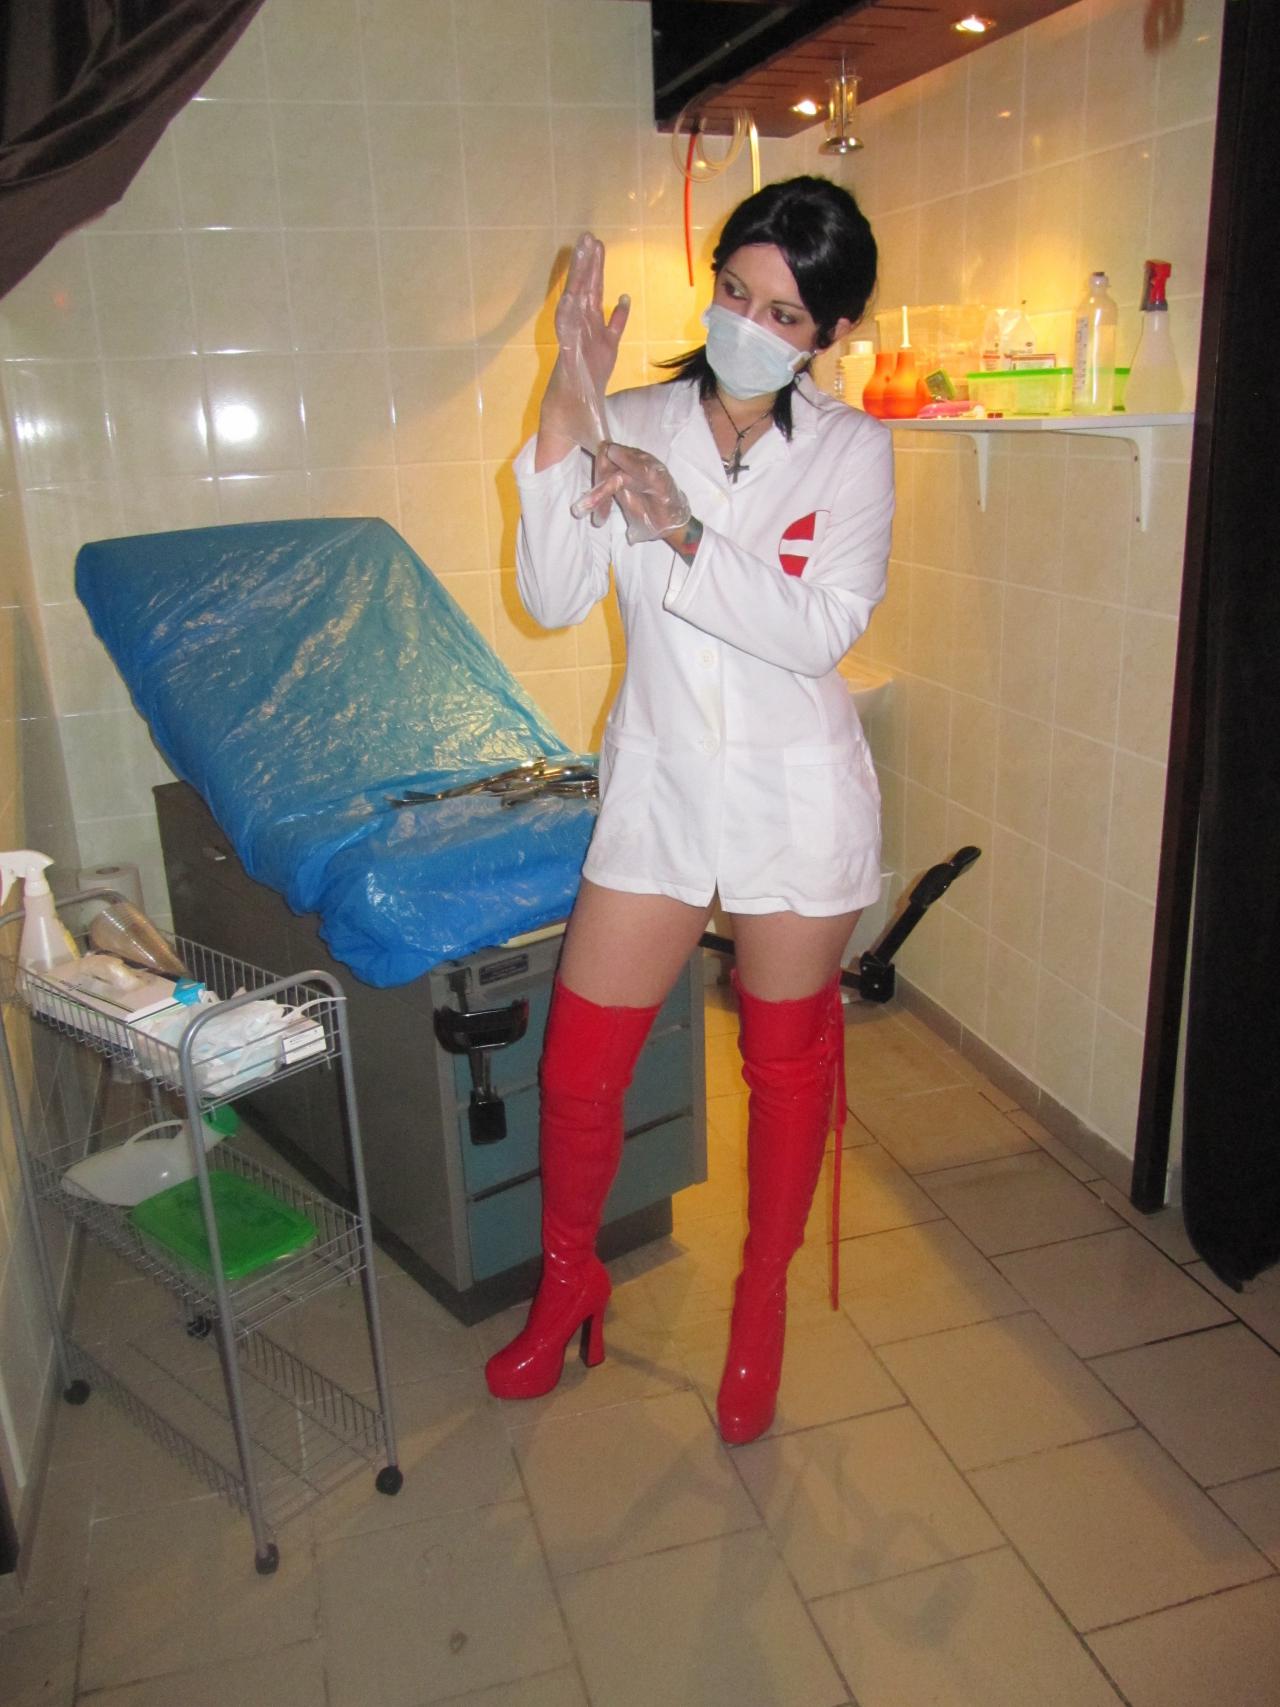 German femdom nurse